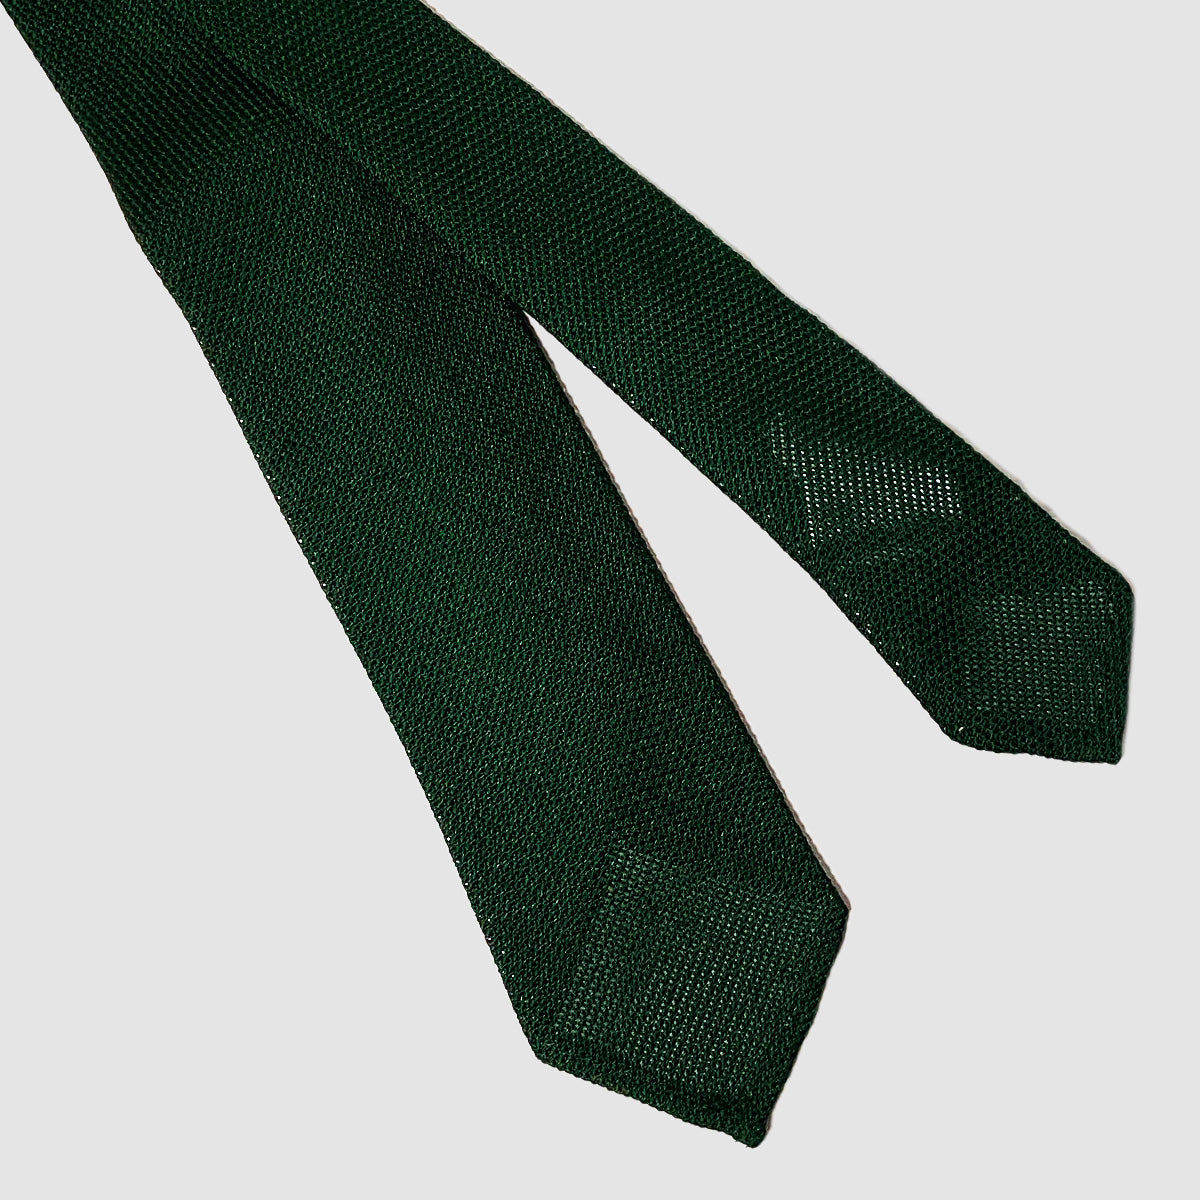 Garza Silk Unlined Tie - Forest Green